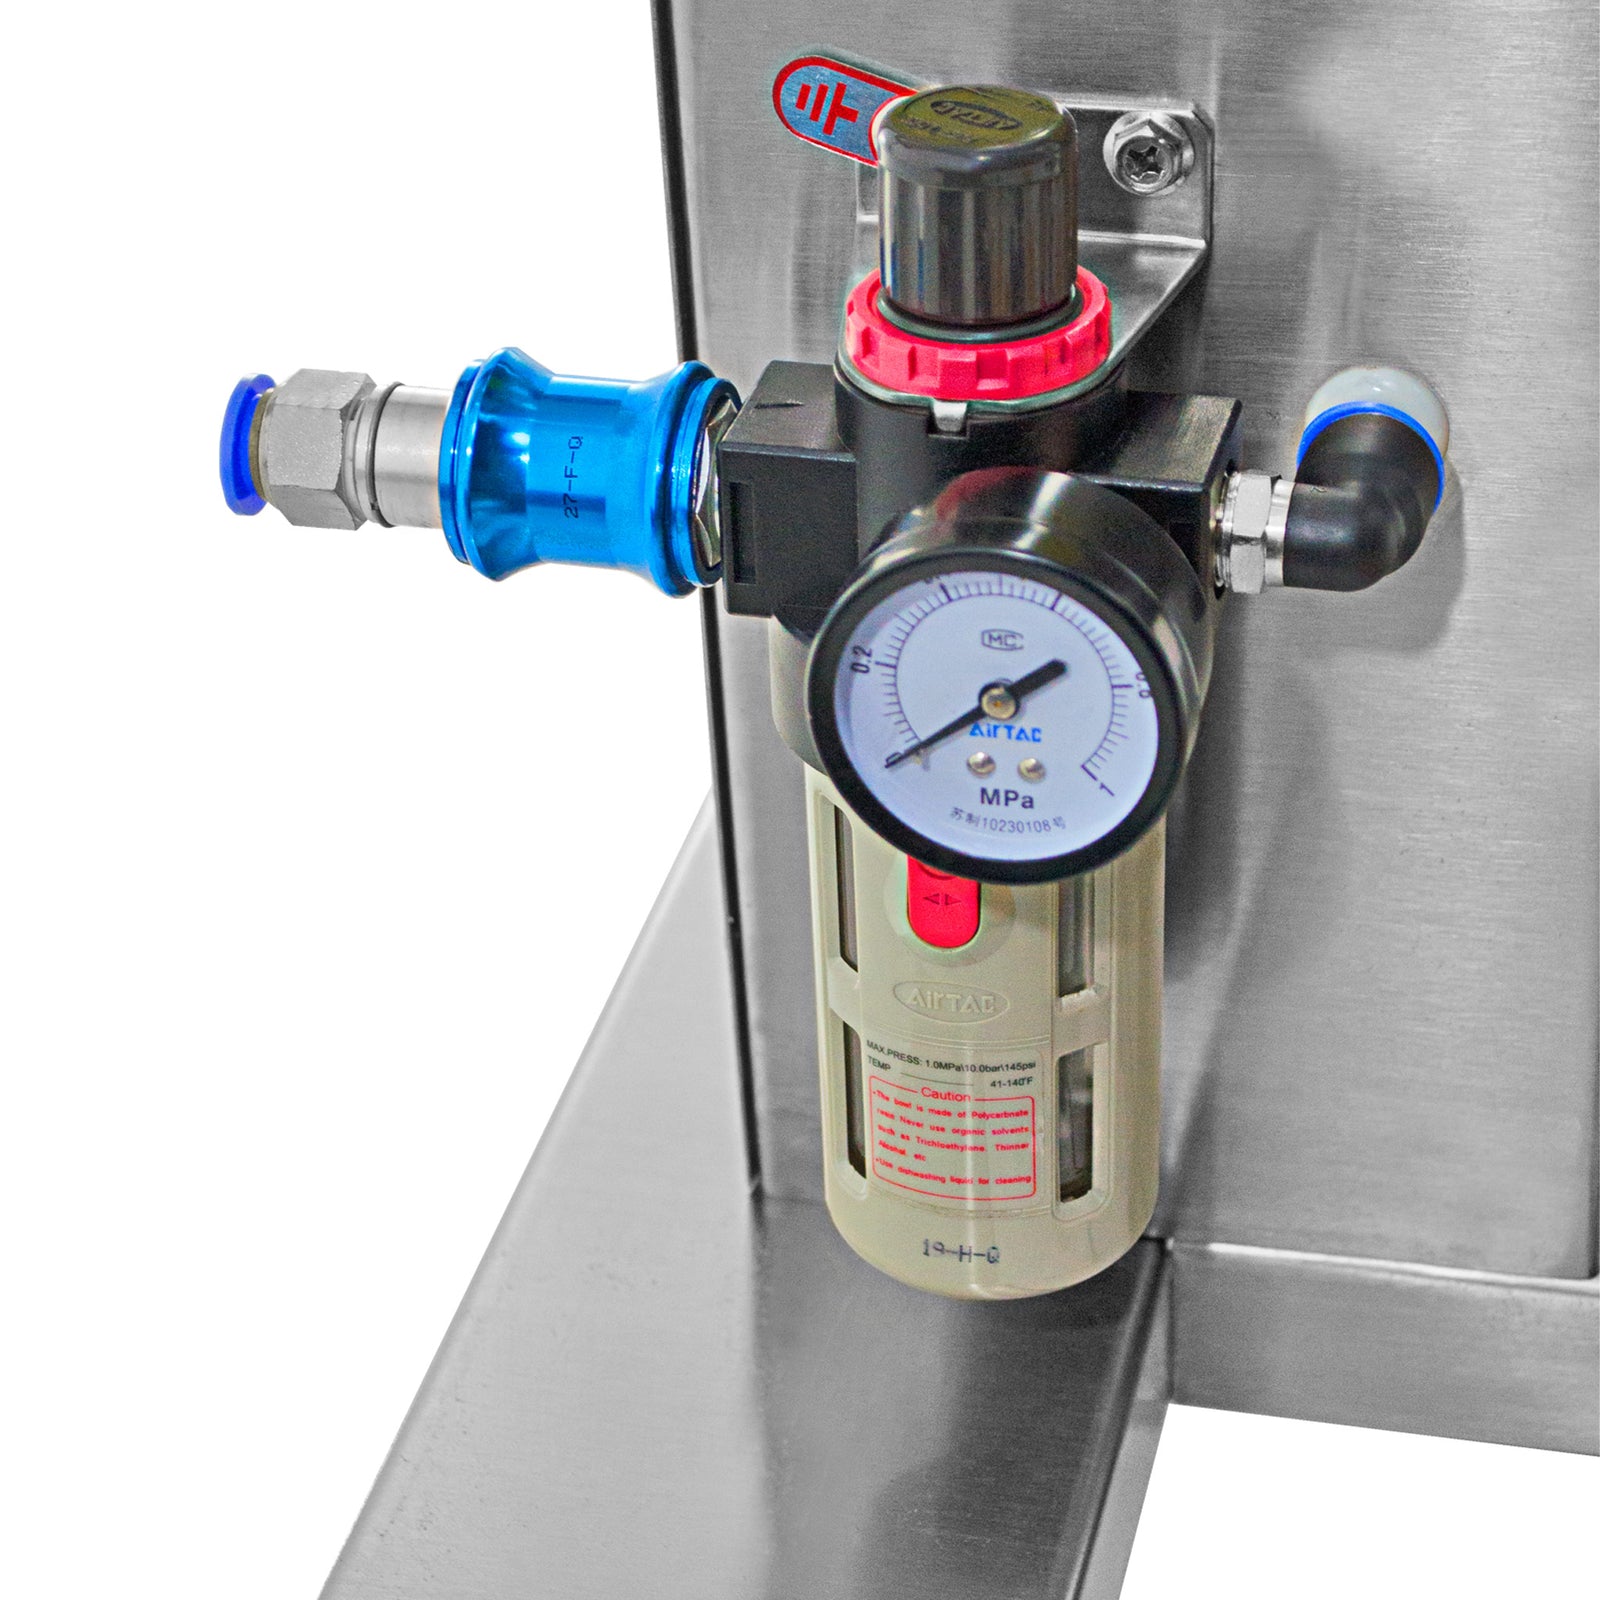 Closeup of the compressed air regulator of the high viscosity piston filler